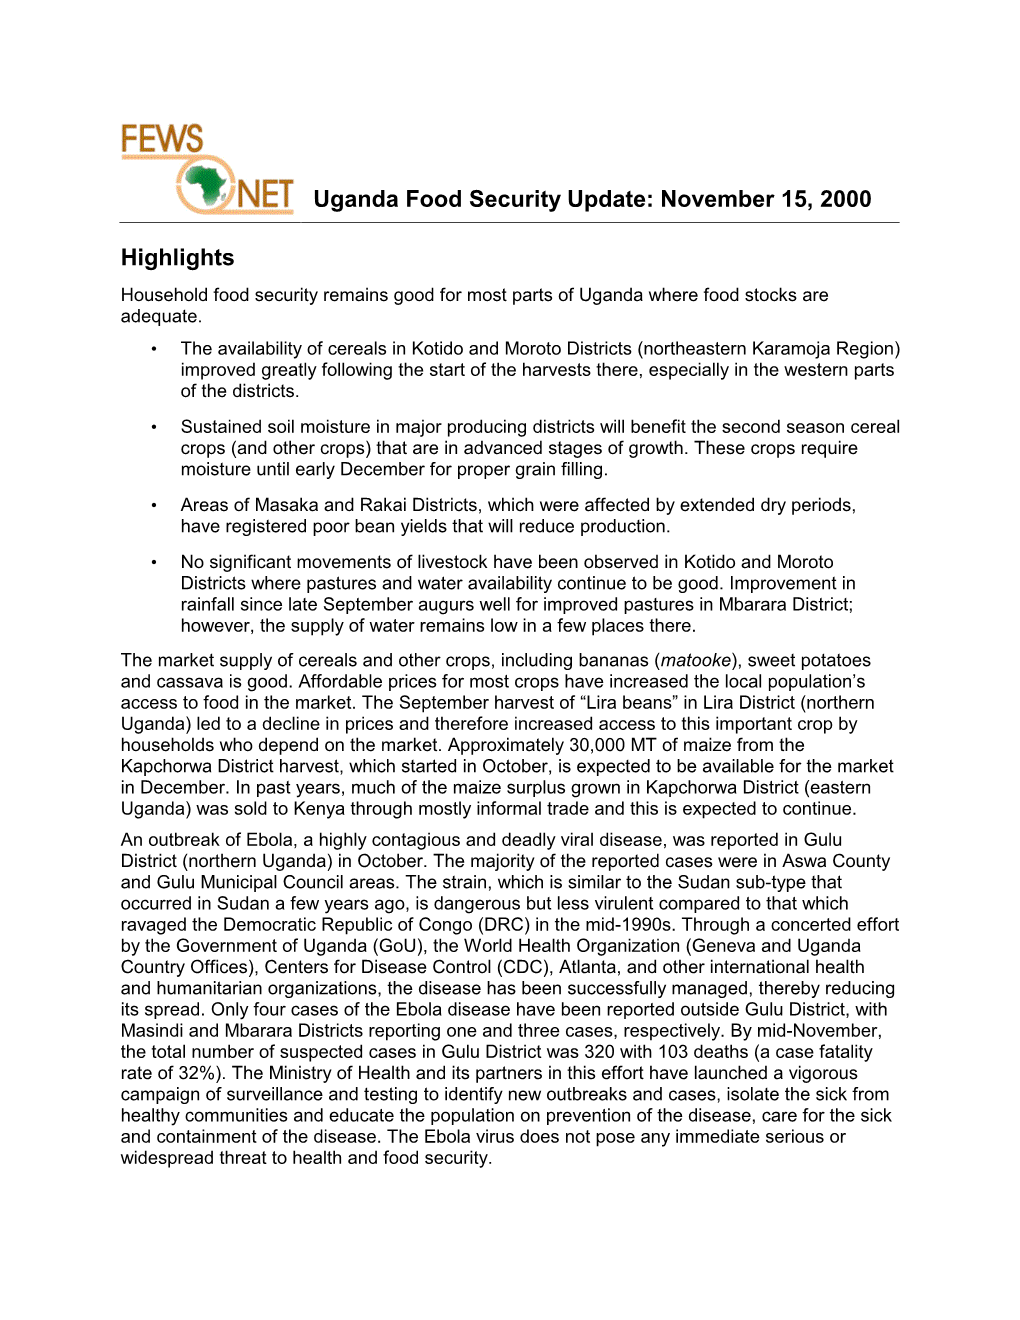 Highlights Uganda Food Security Update: November 15, 2000